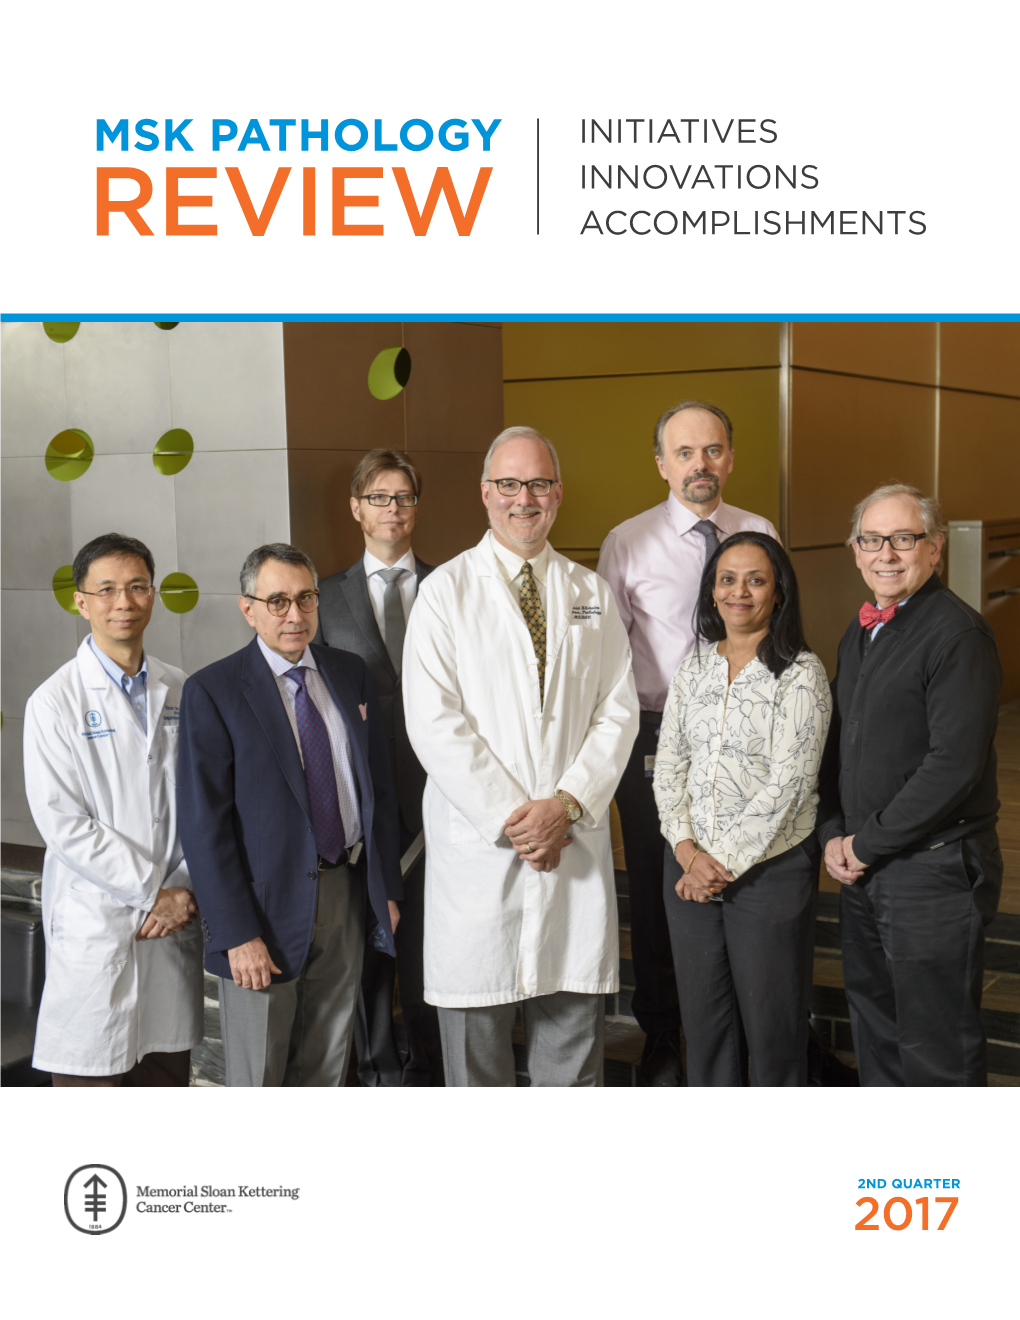 Msk Pathology Initiatives Innovations Review Accomplishments